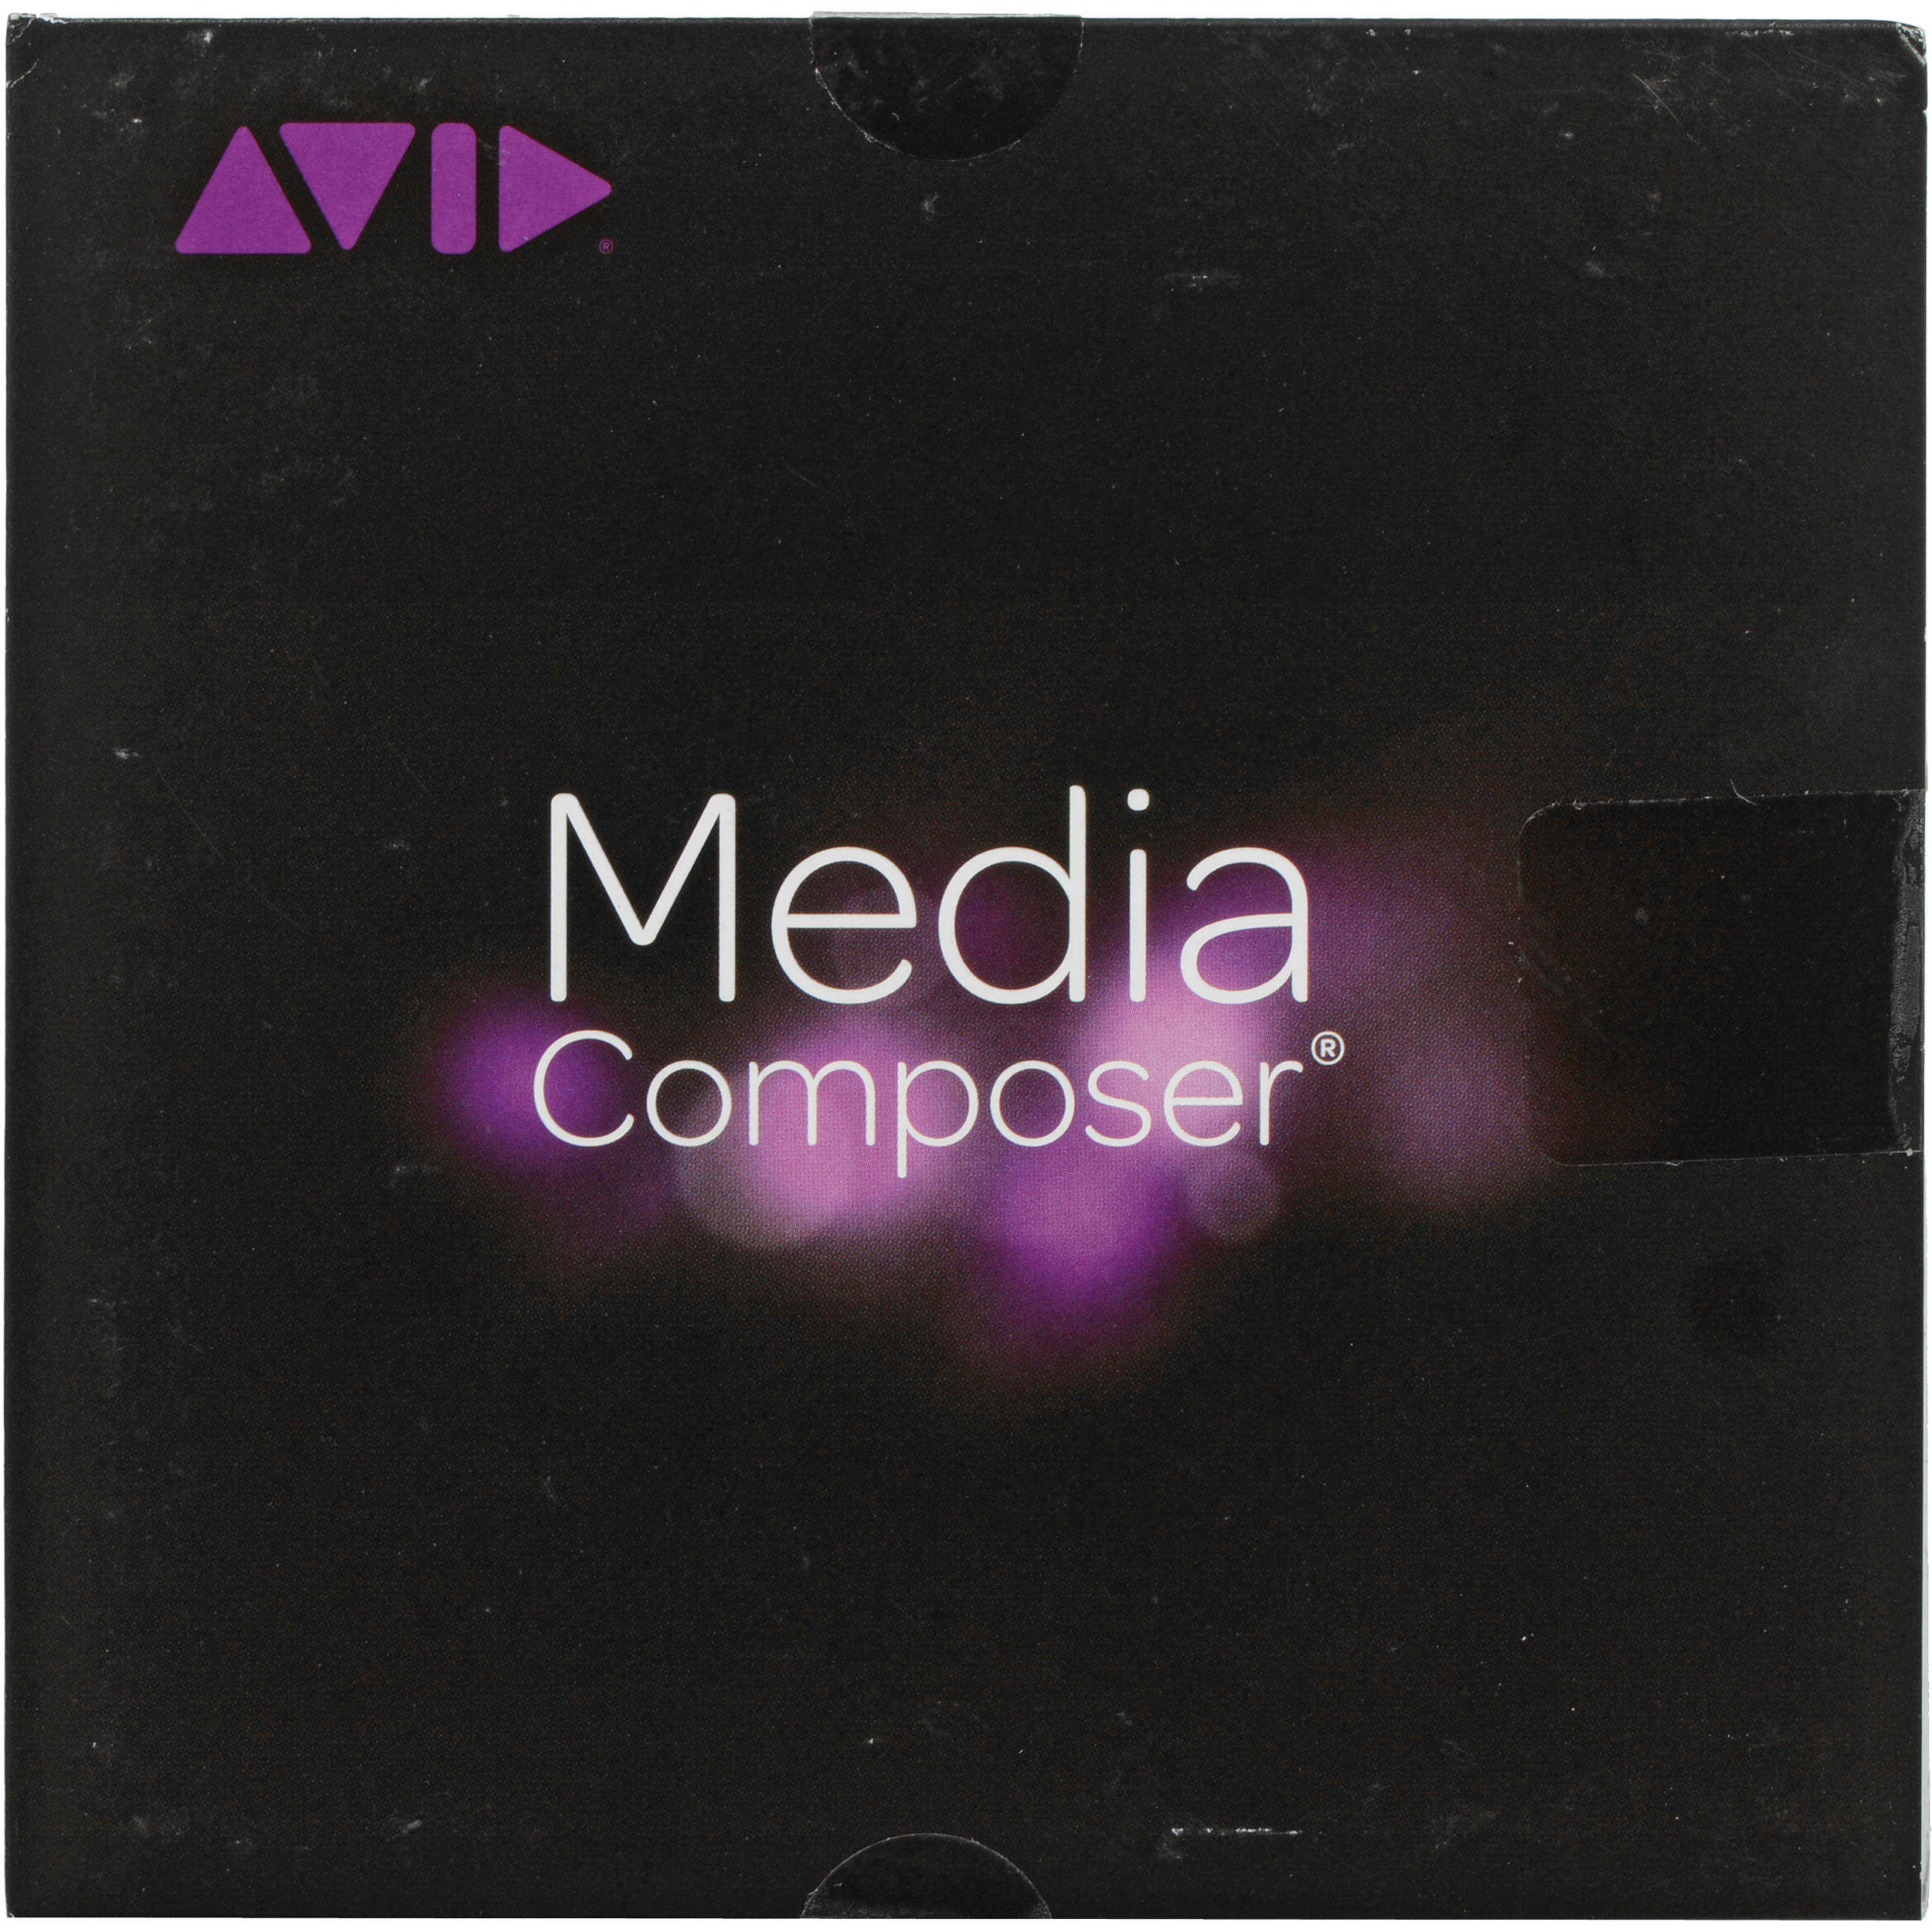 avid media composer 8 crack mac